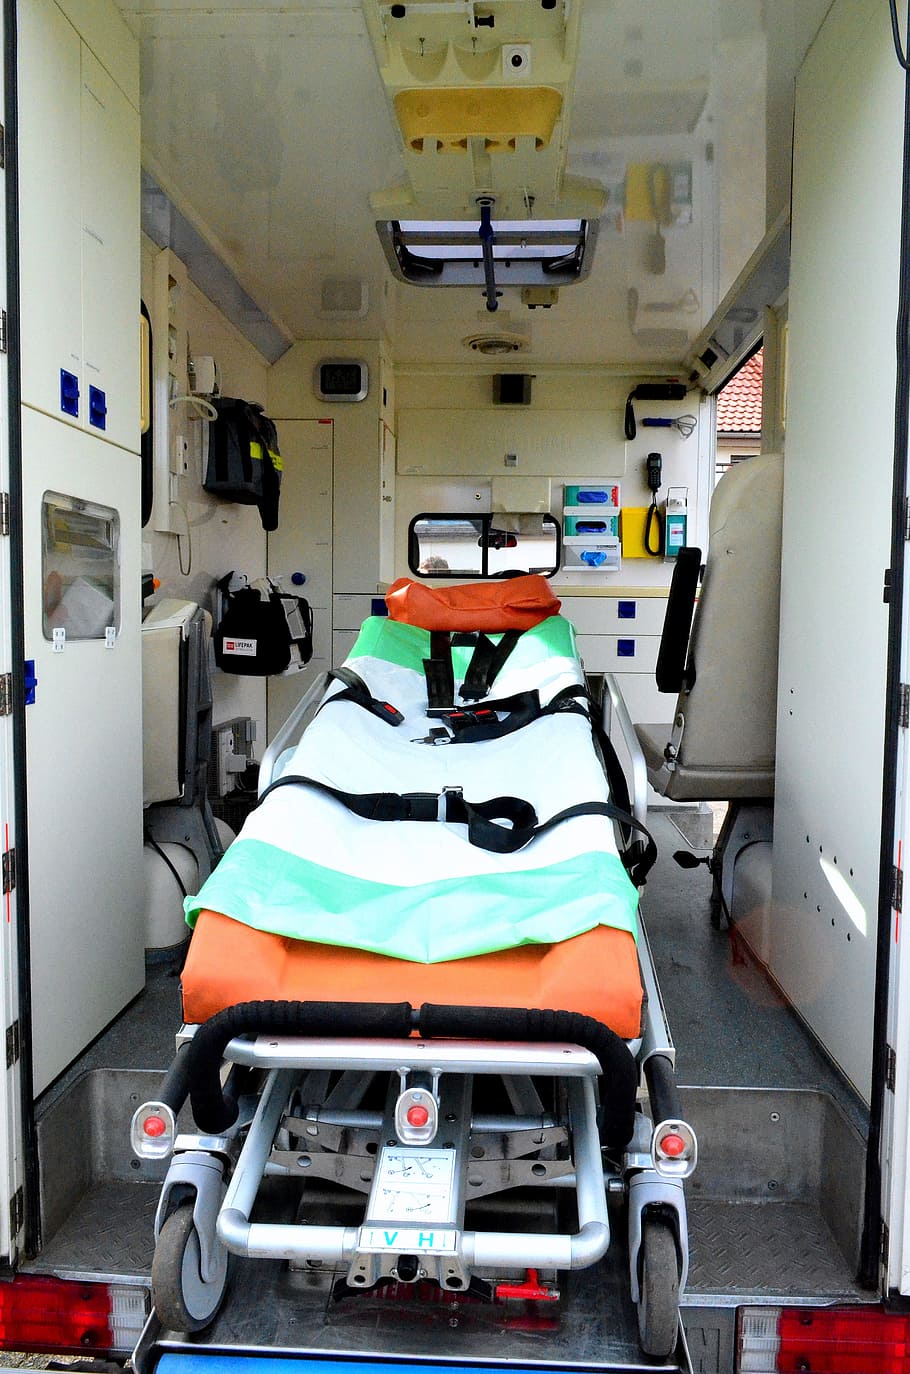 orange ambulance bed in vehicle, ambulance service, first aid